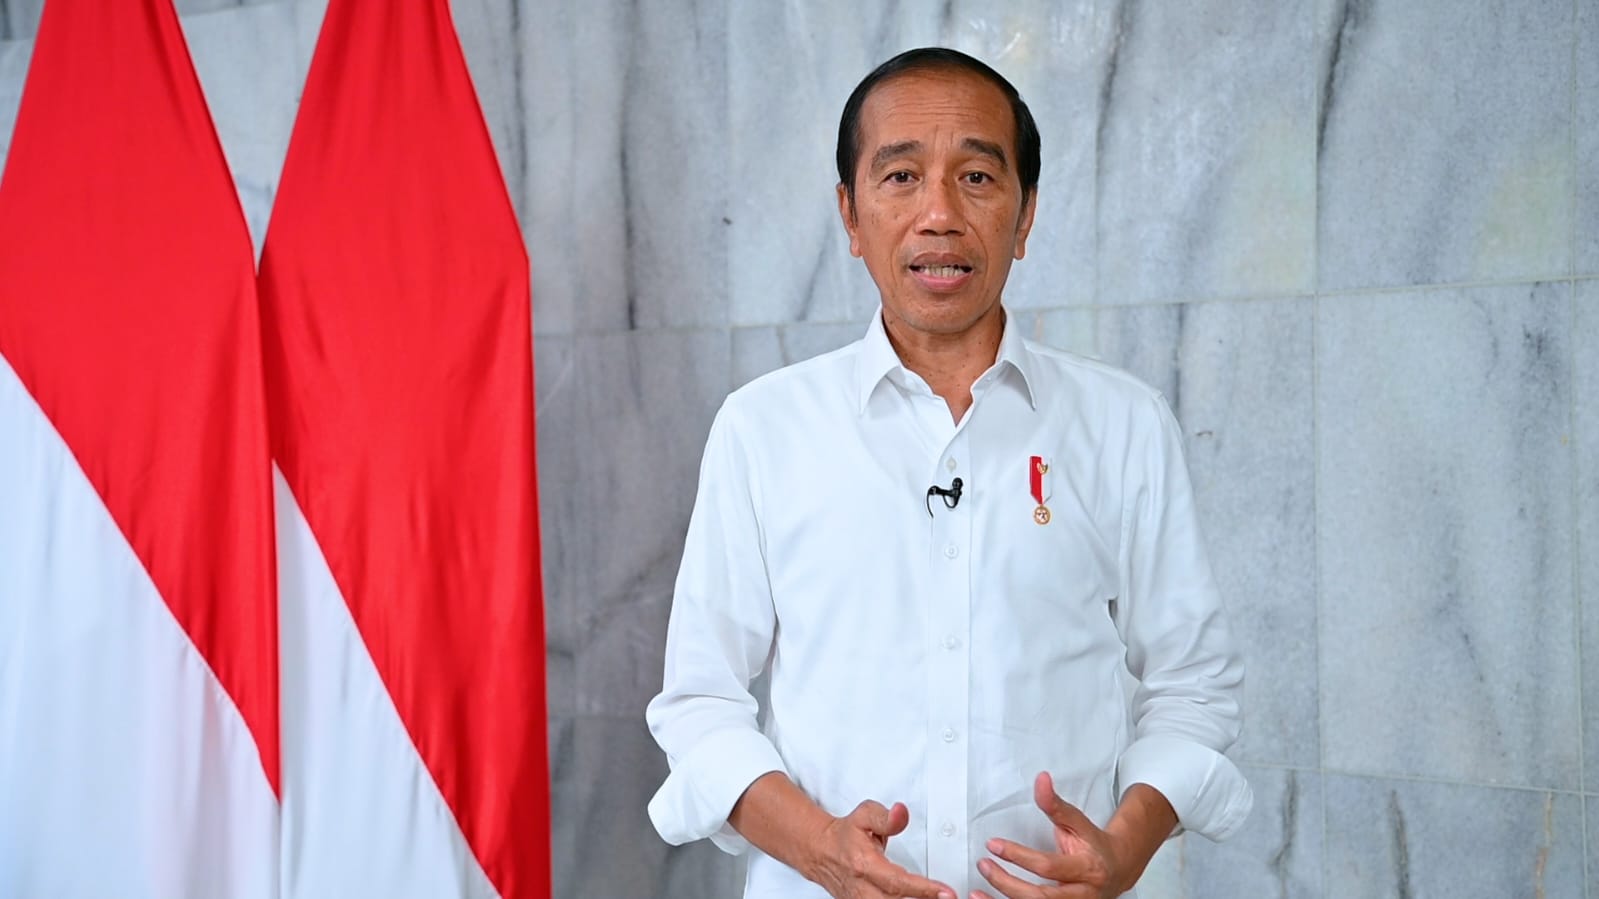 Presiden Jokowi Hormati Keputusan FIFA Terkait Piala Dunia U-20